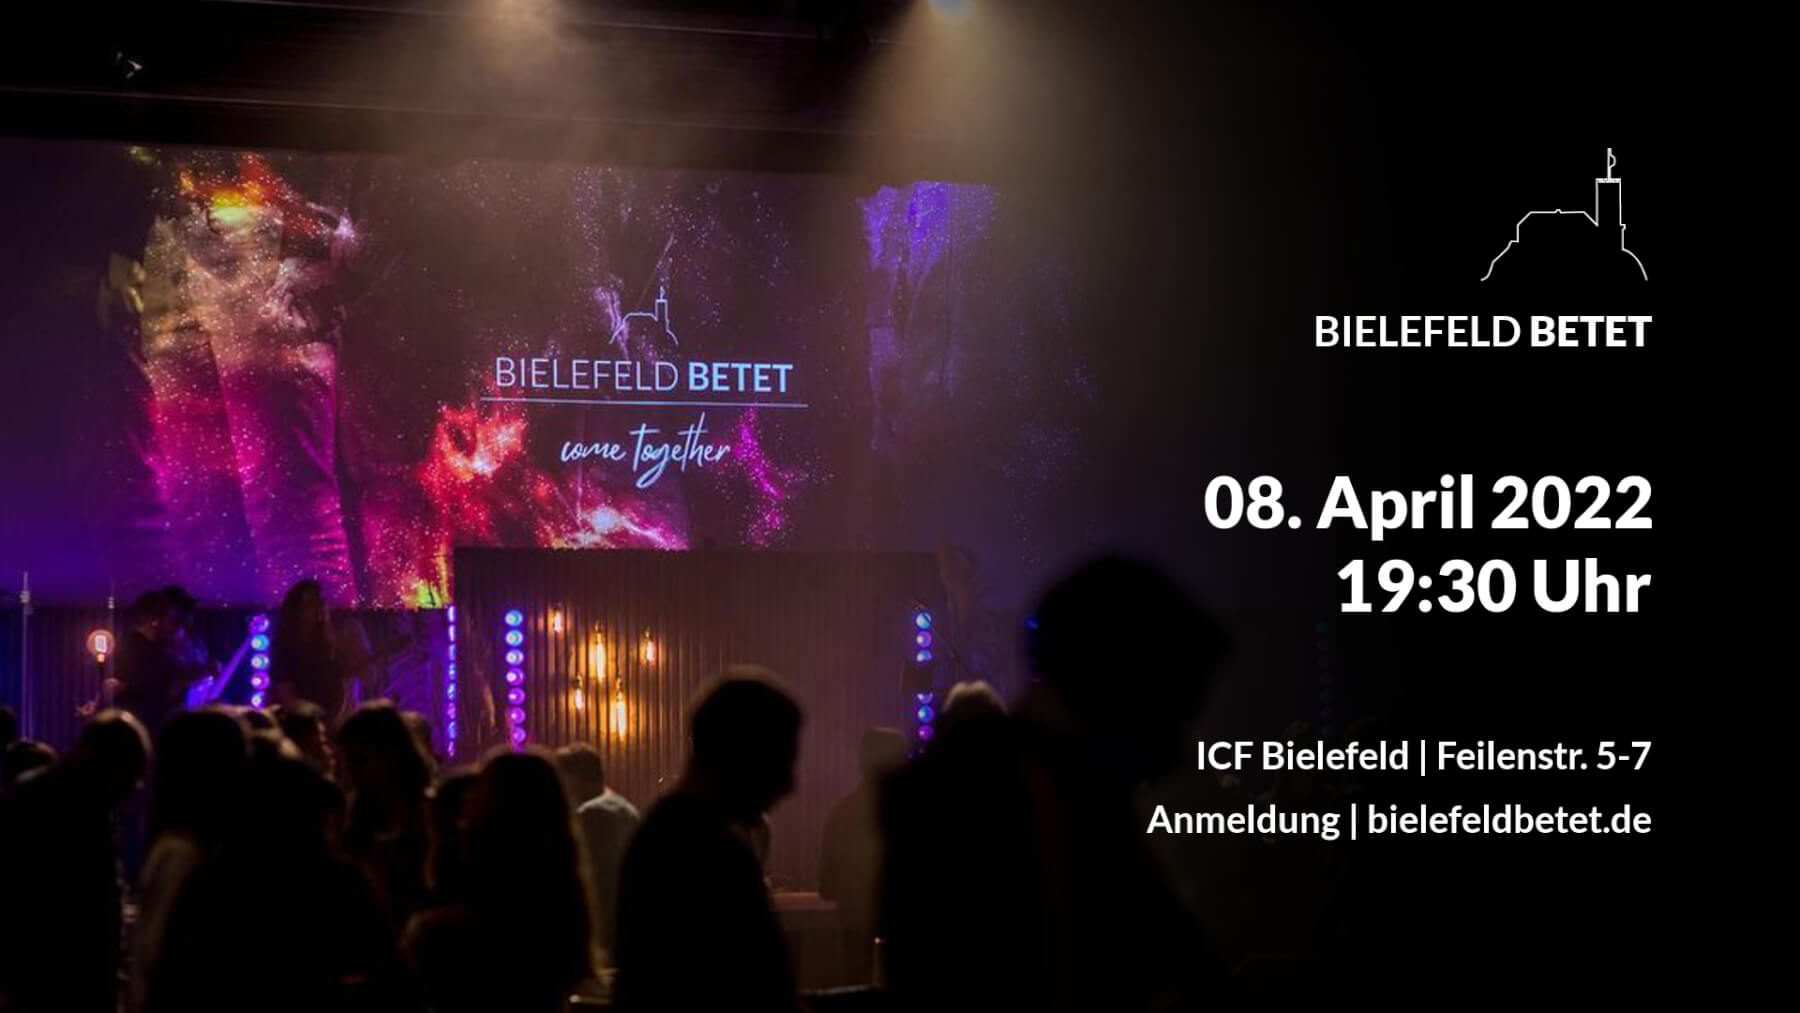 Bielefeld betet